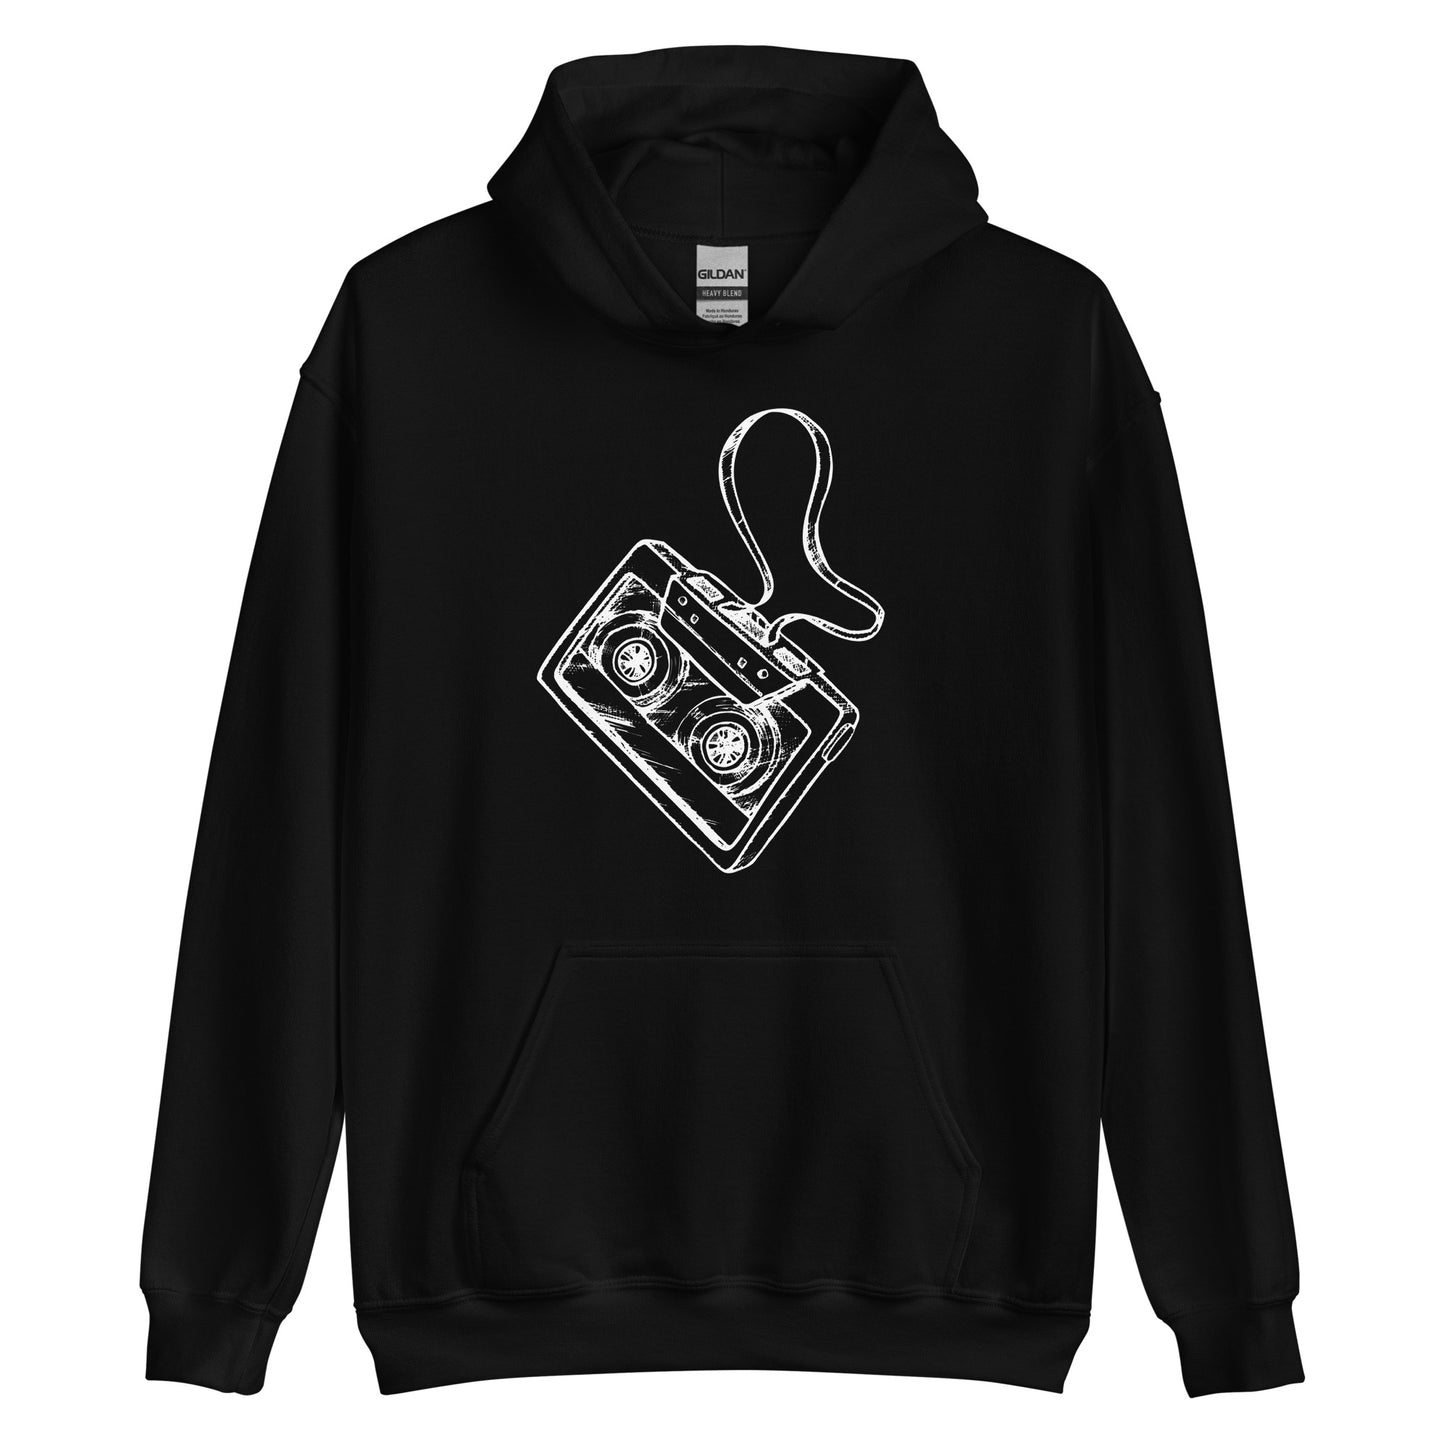 Retro Cassette Hoodie - Minimalist Music Sweatshirt